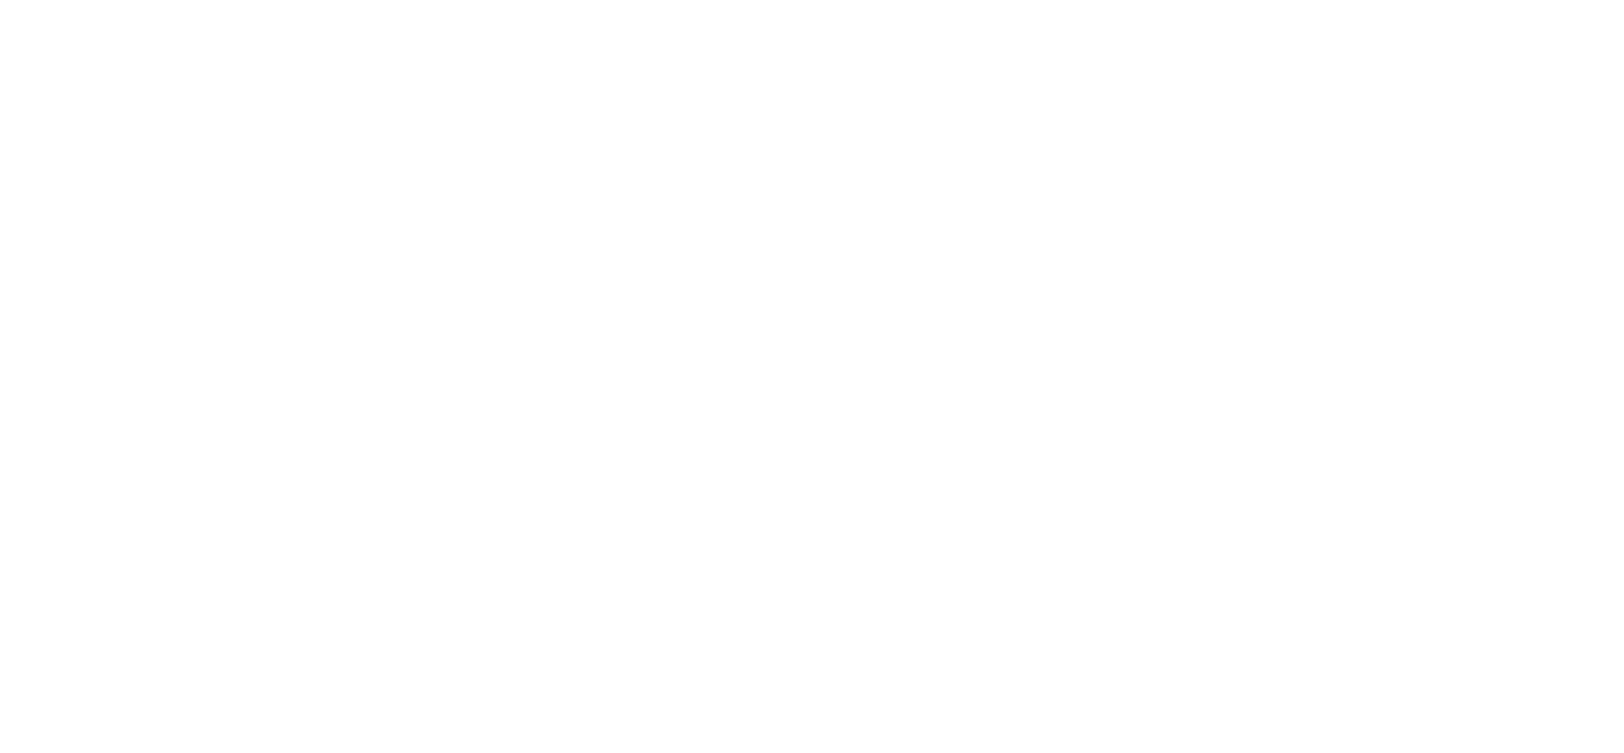 Primary Health Properties logo grand pour les fonds sombres (PNG transparent)